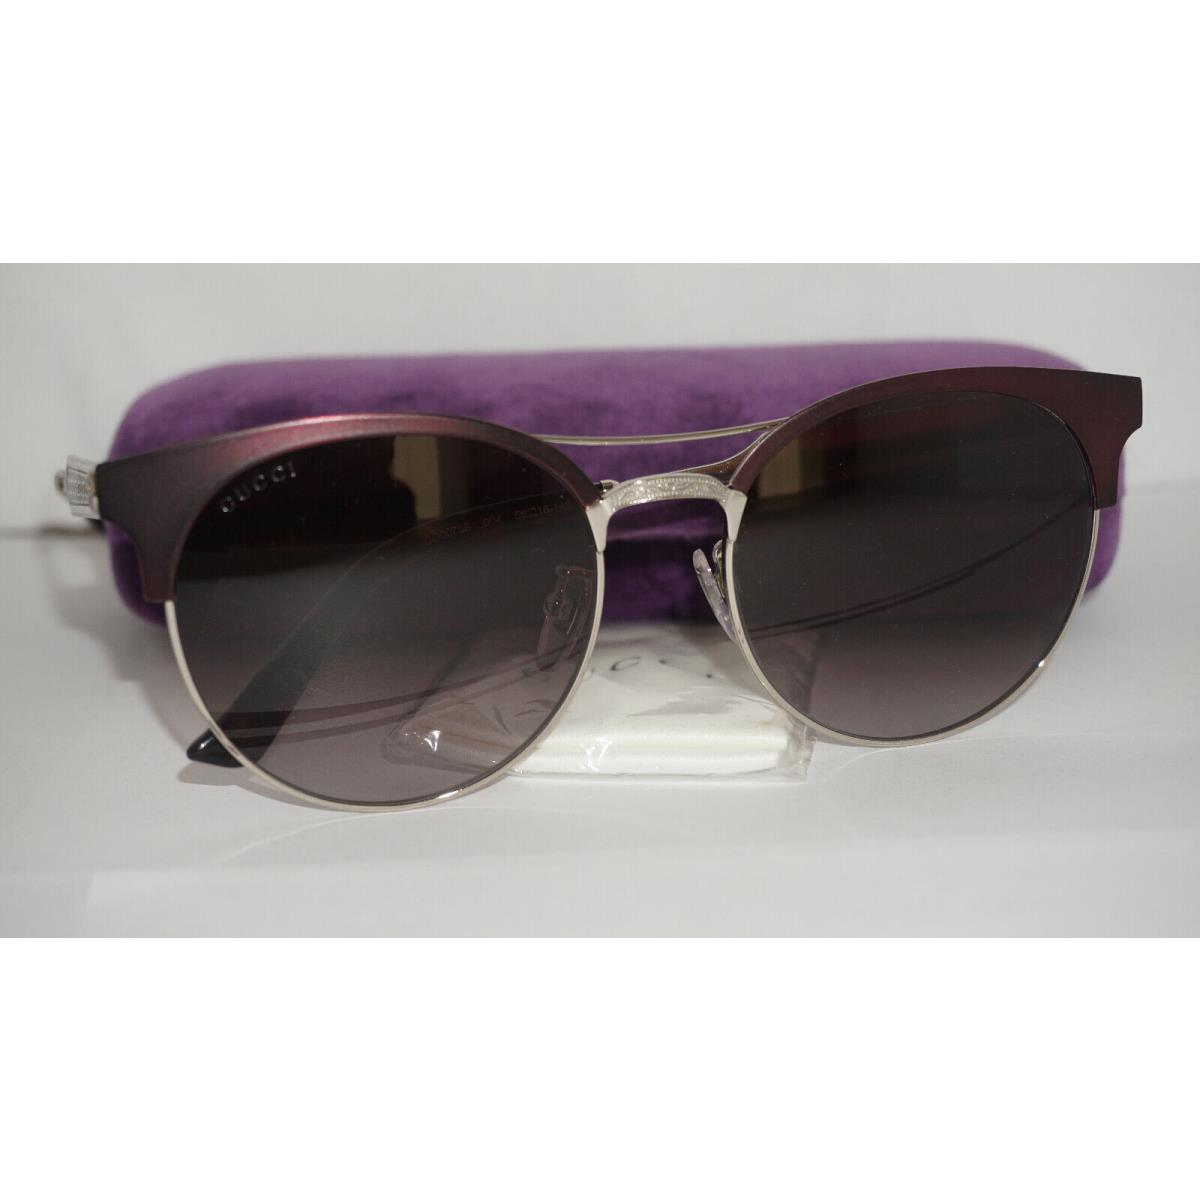 Gucci Sunglasses Burgundy Palladium Grey Gradient GG0075S 004 56 18 145